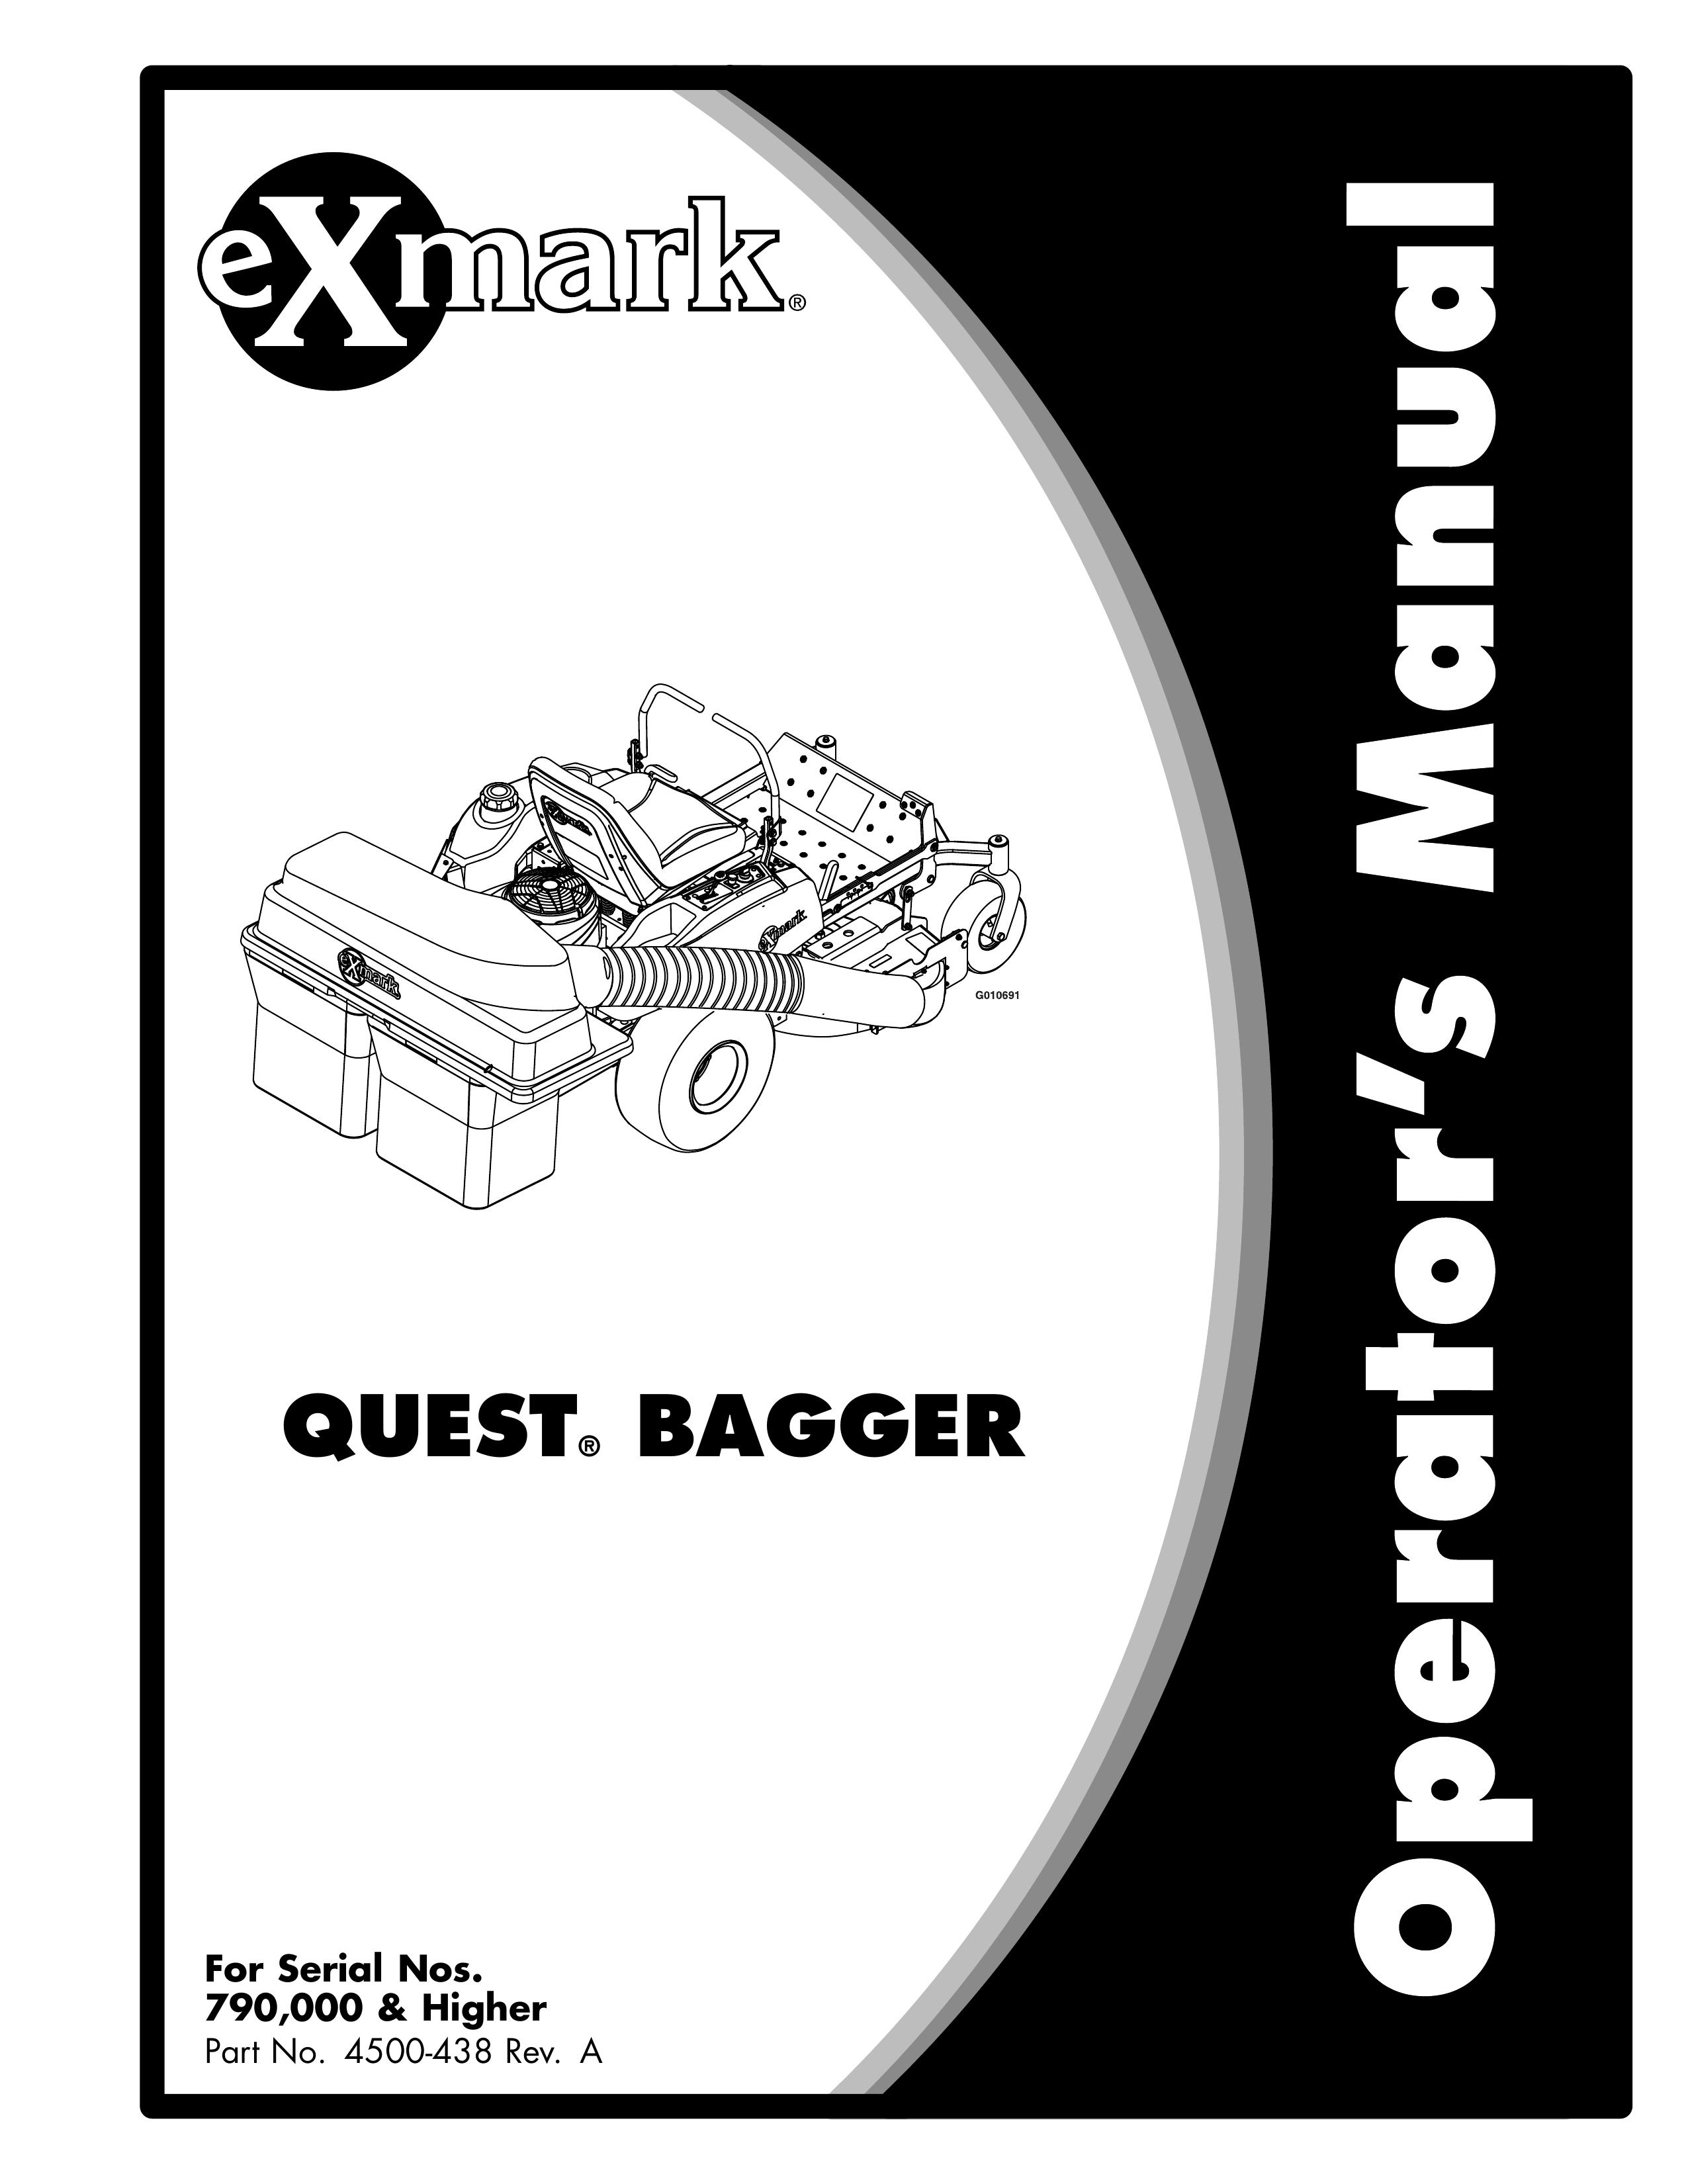 Exmark 4500-438 rev. a Lawn Mower Accessory User Manual